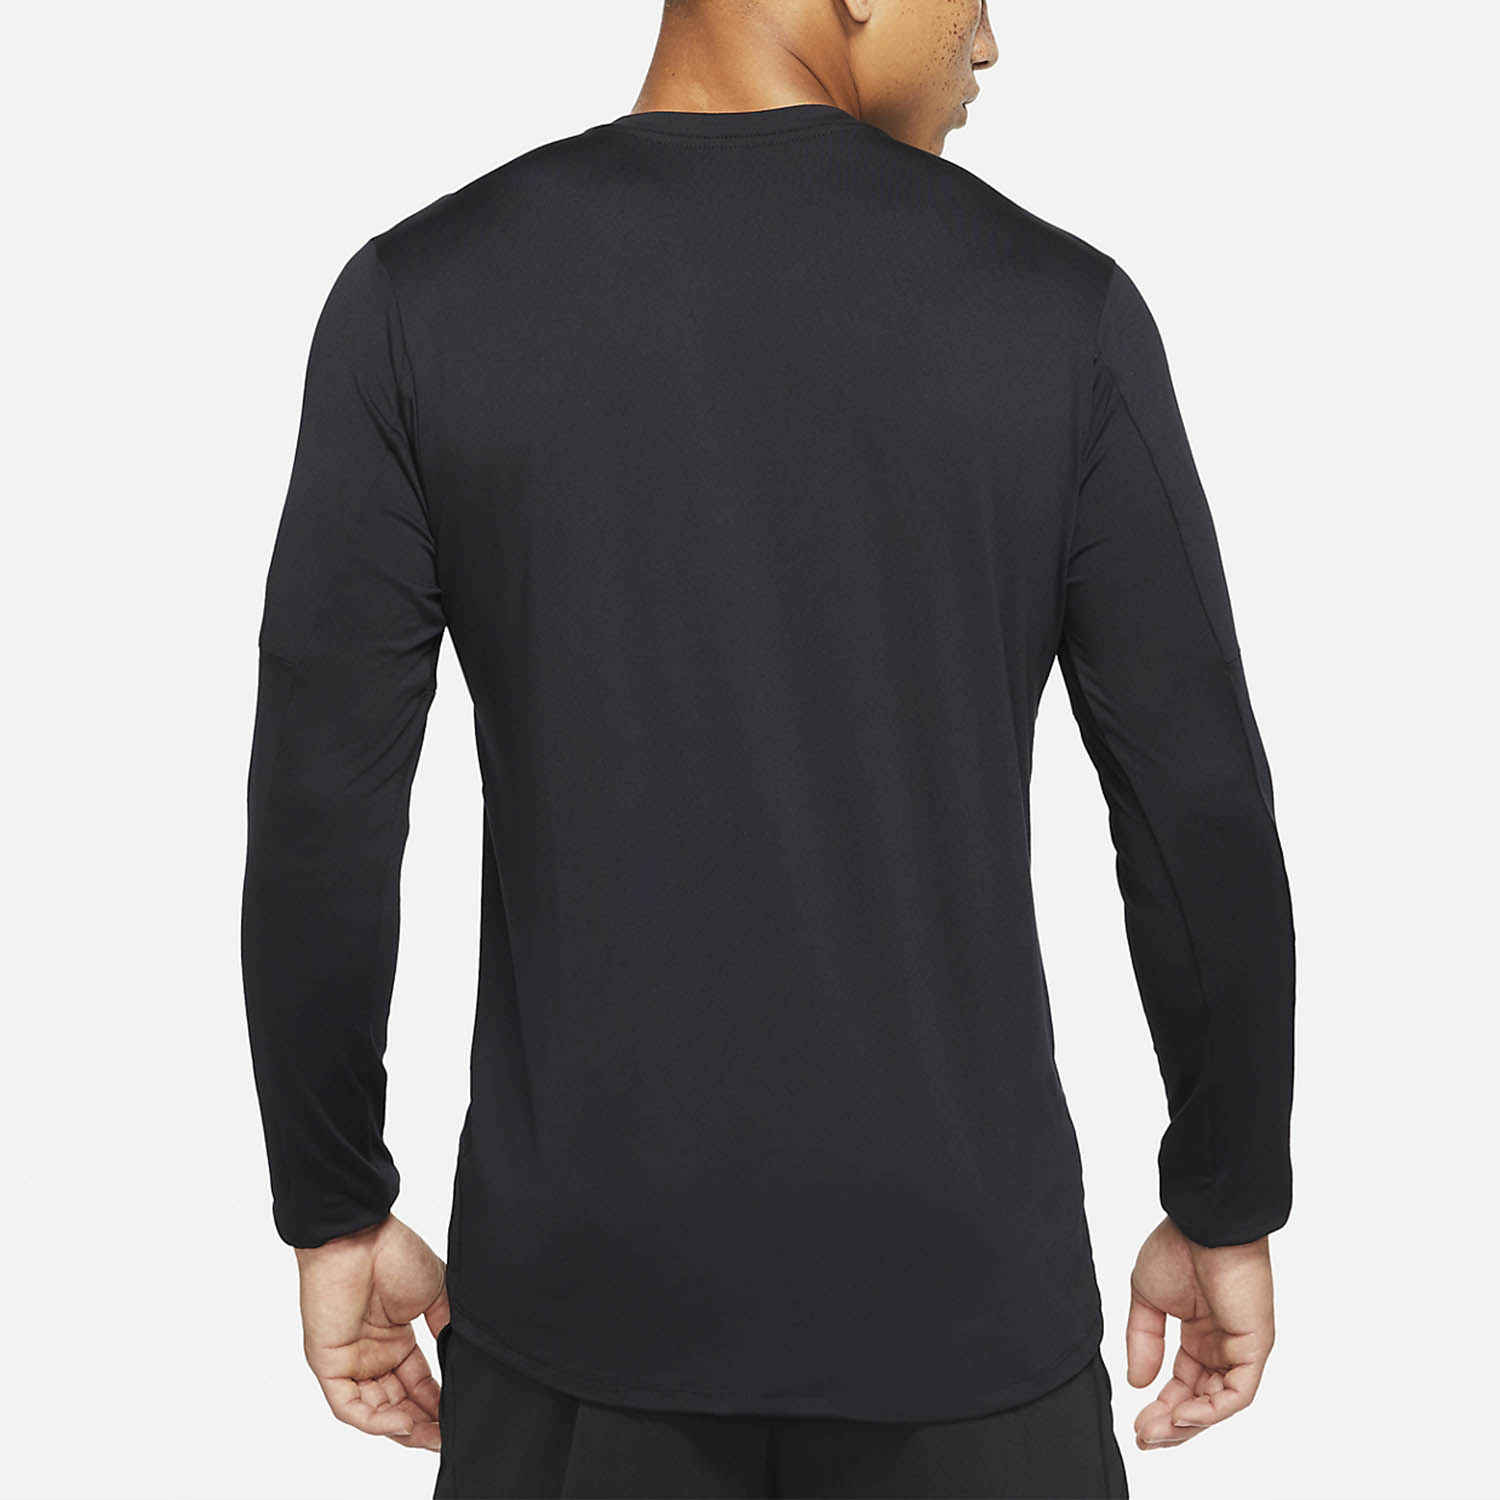 Nike Dri-FIT Element Crew Men's Running Shirt - Black